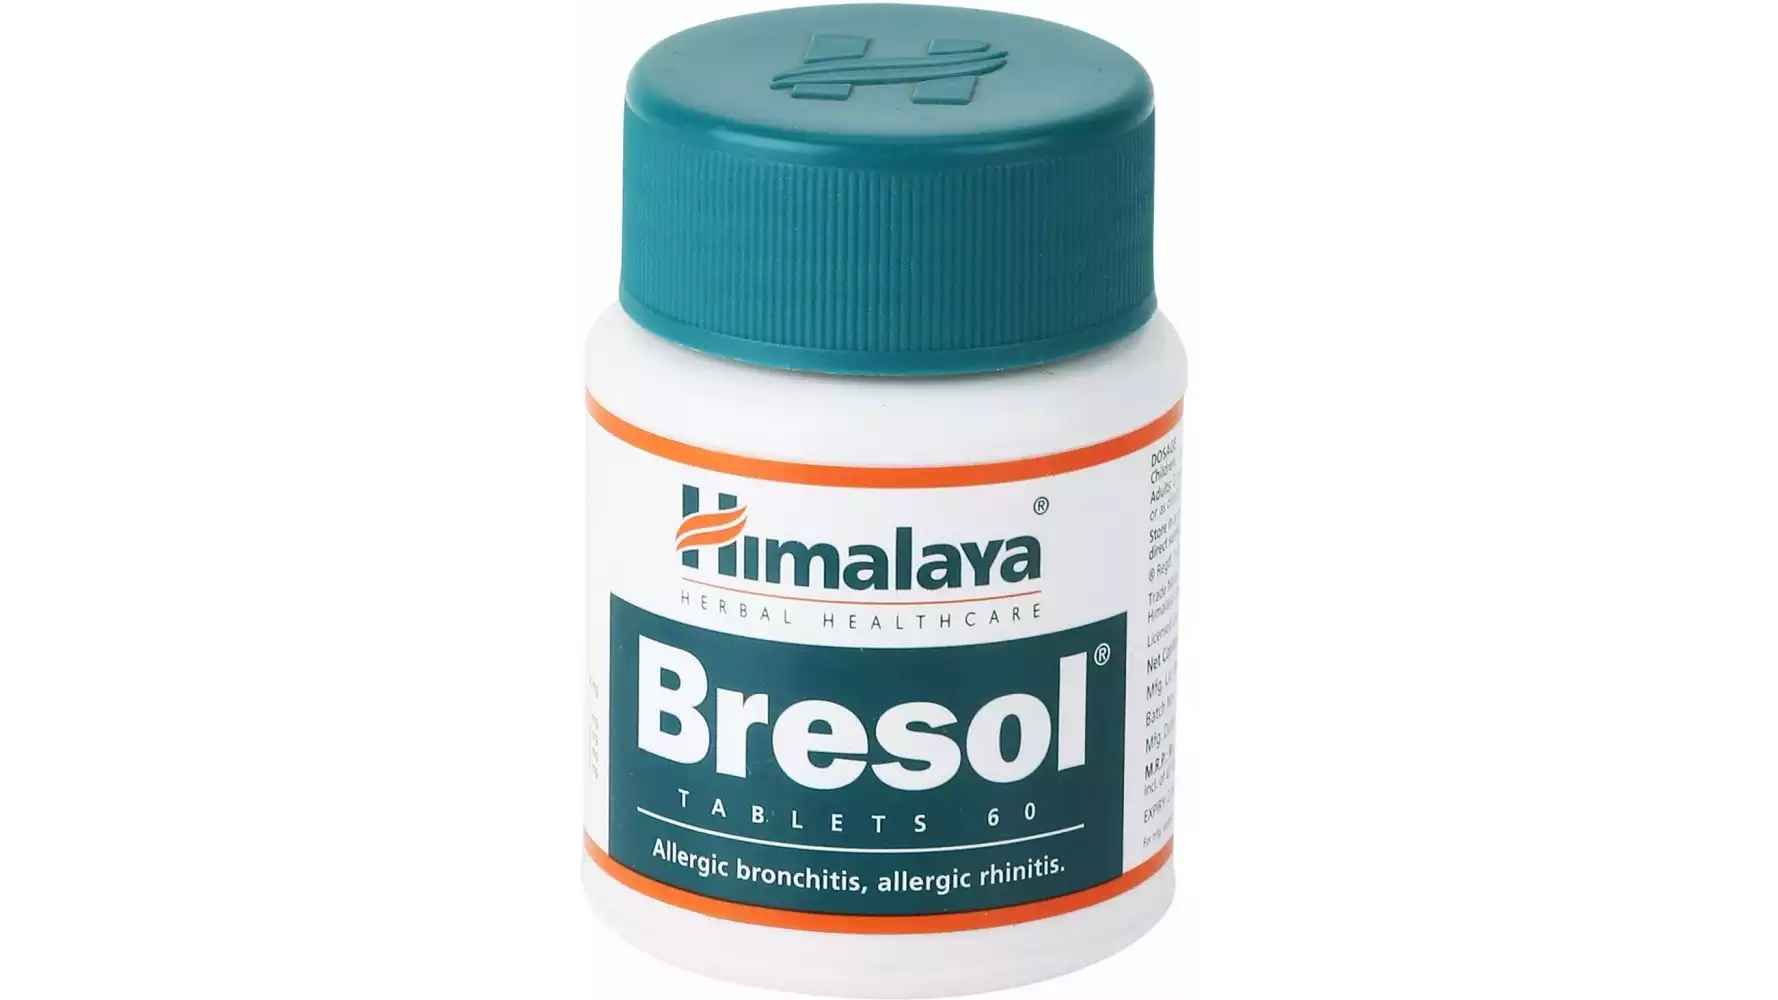 Himalaya Bresol Tablets (60tab)